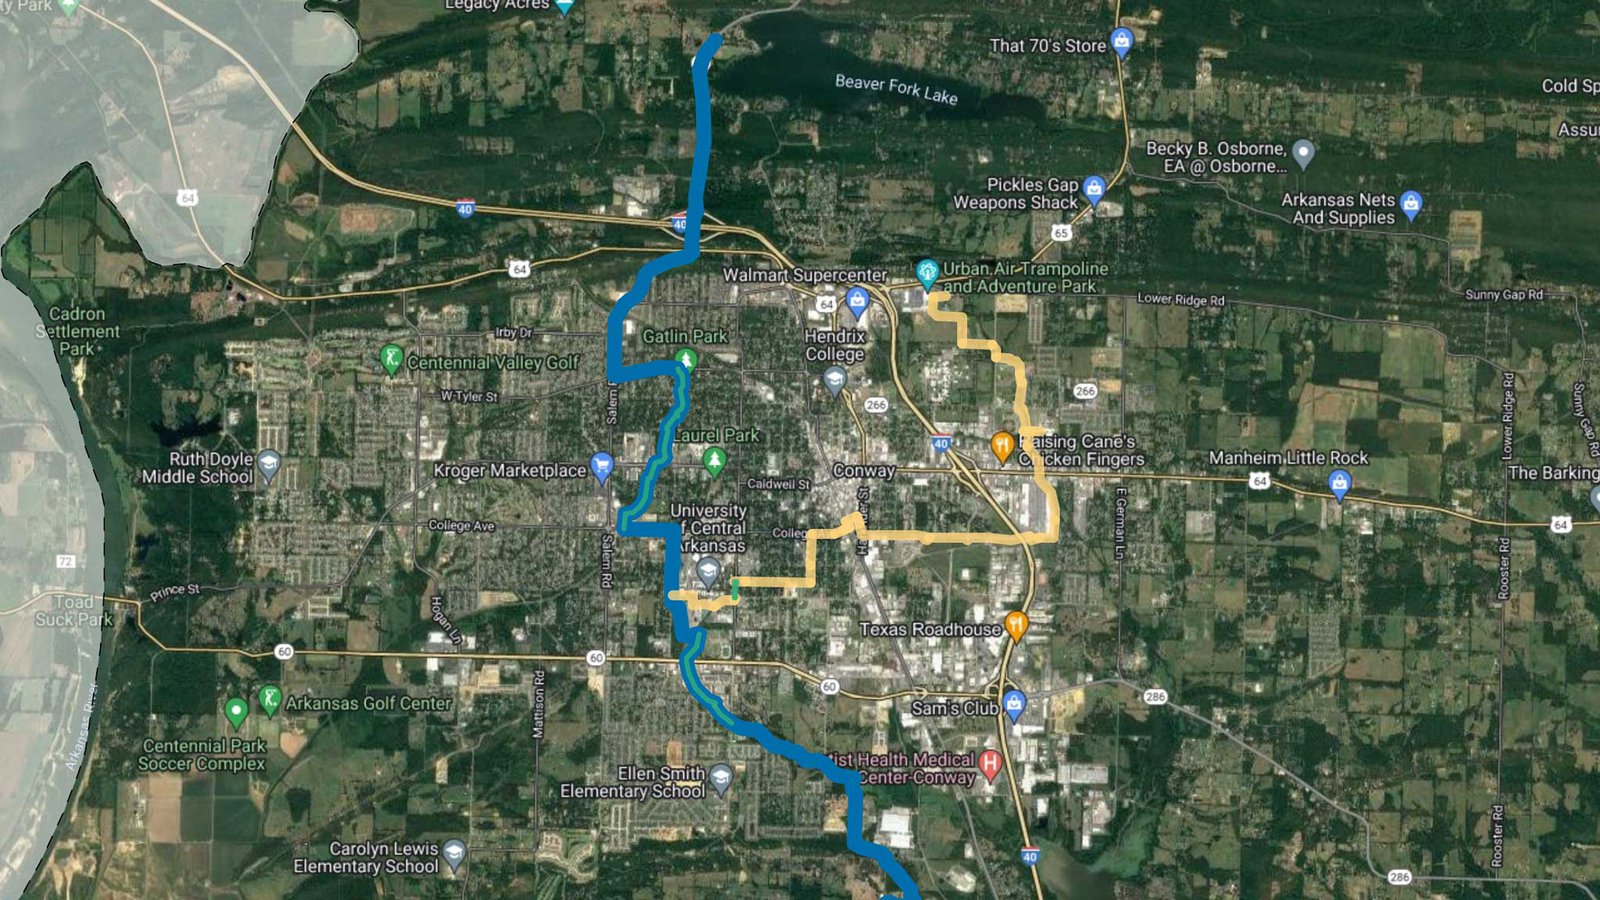 central-arkansas-regional-greenways-planning-map-conway-screenshot.jpg